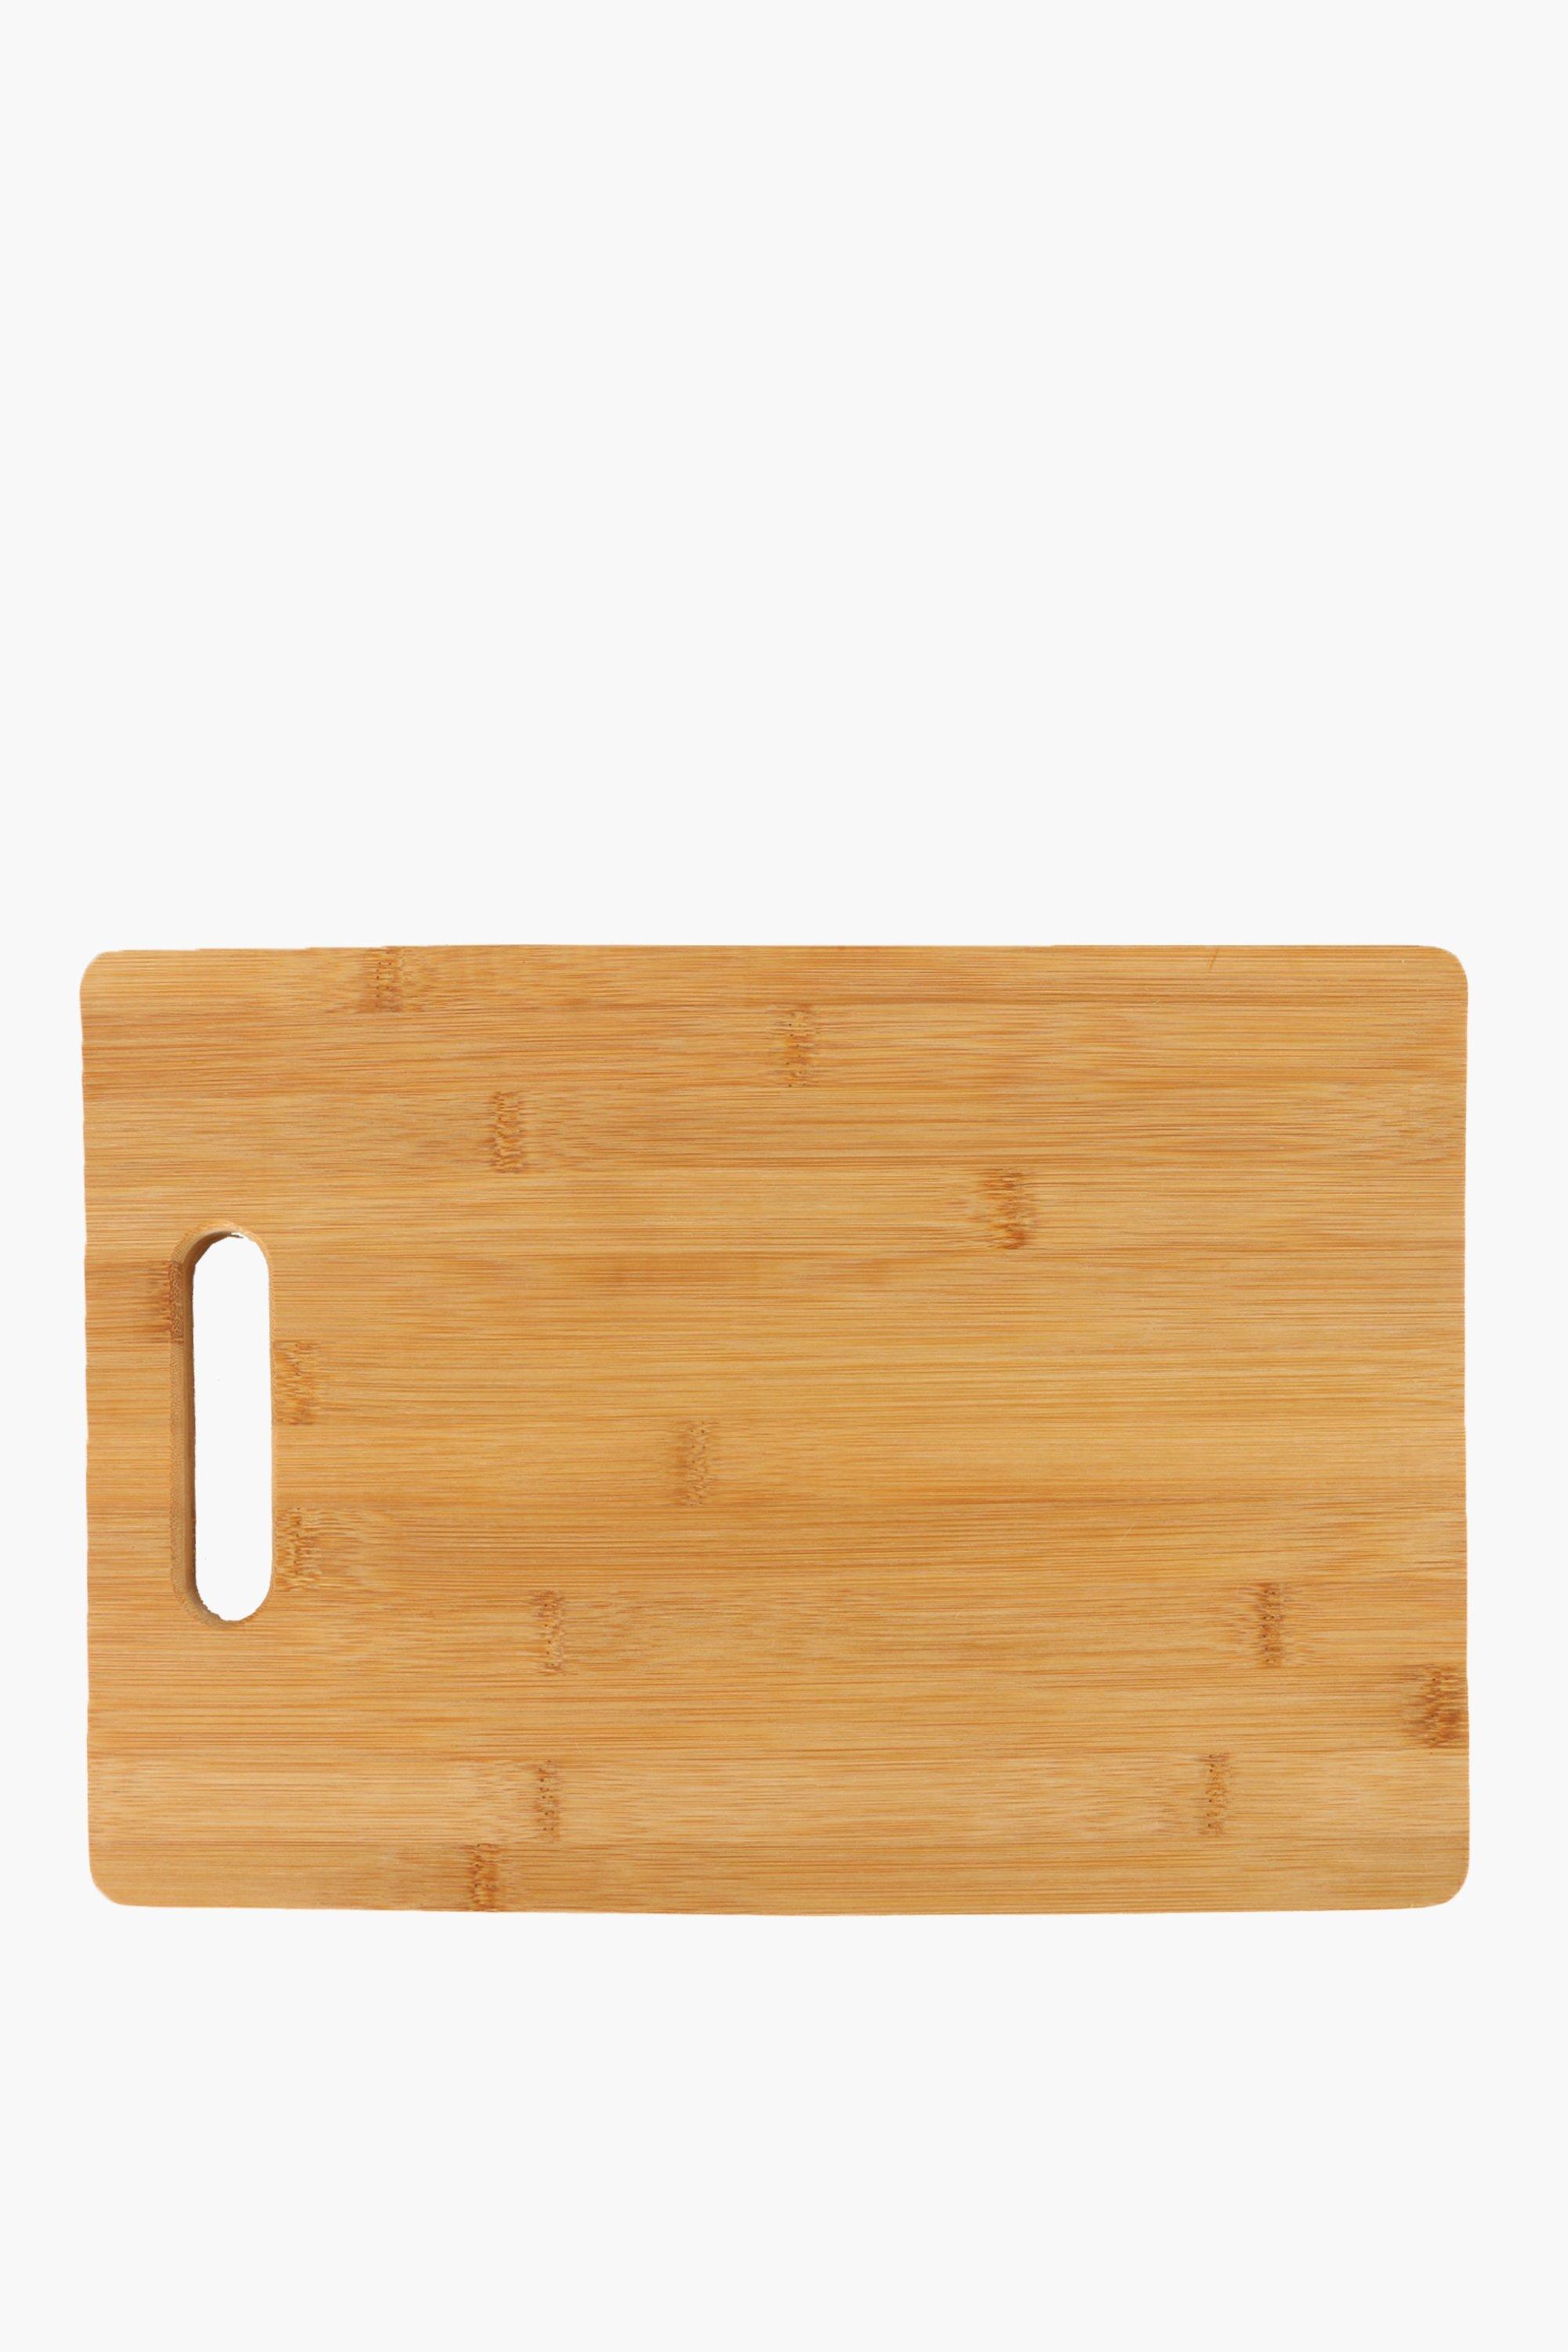 Homewood Round Chopping Board